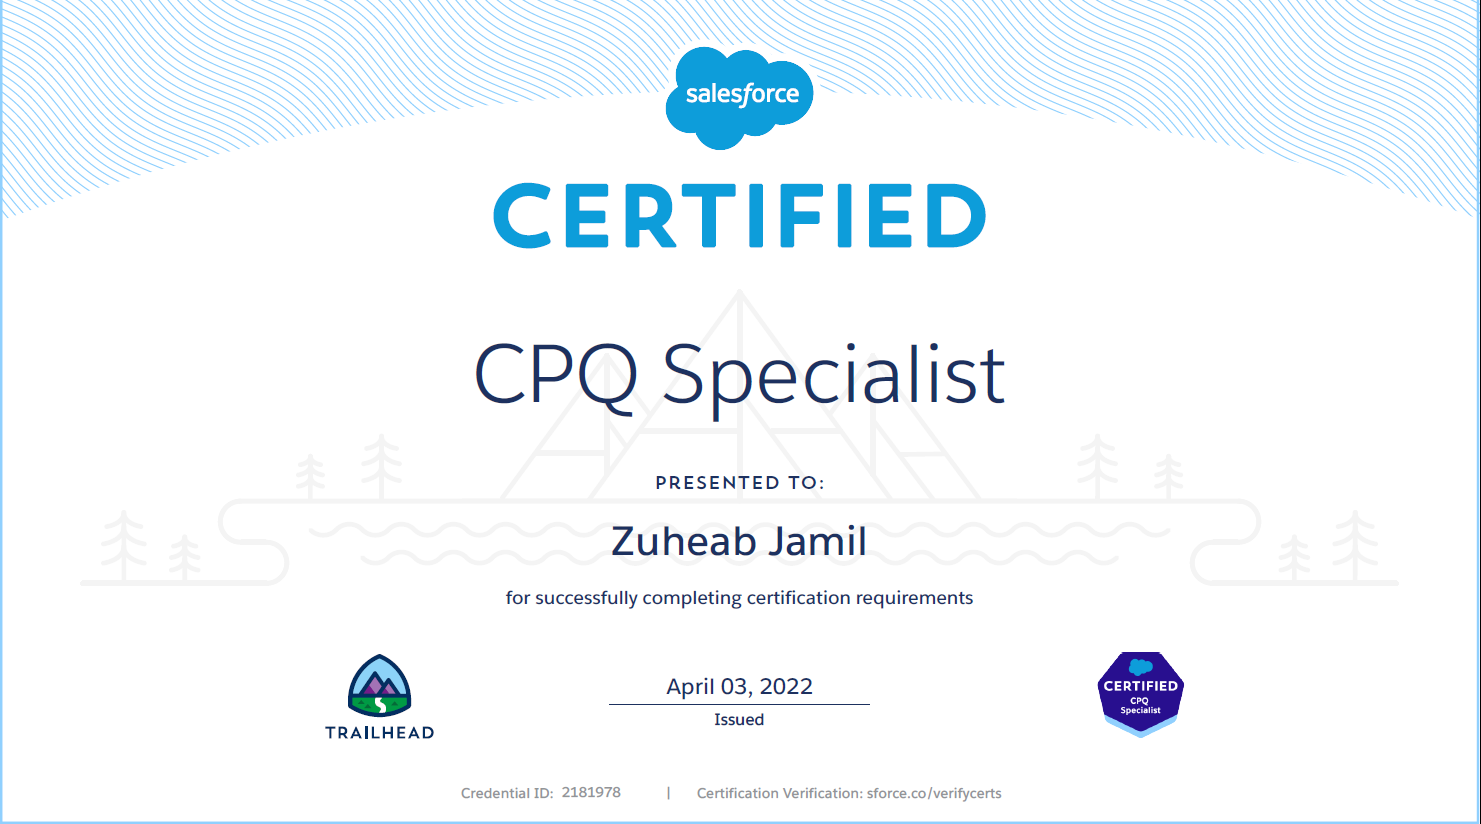 Salesforce Certified CPQ Specialist Certification